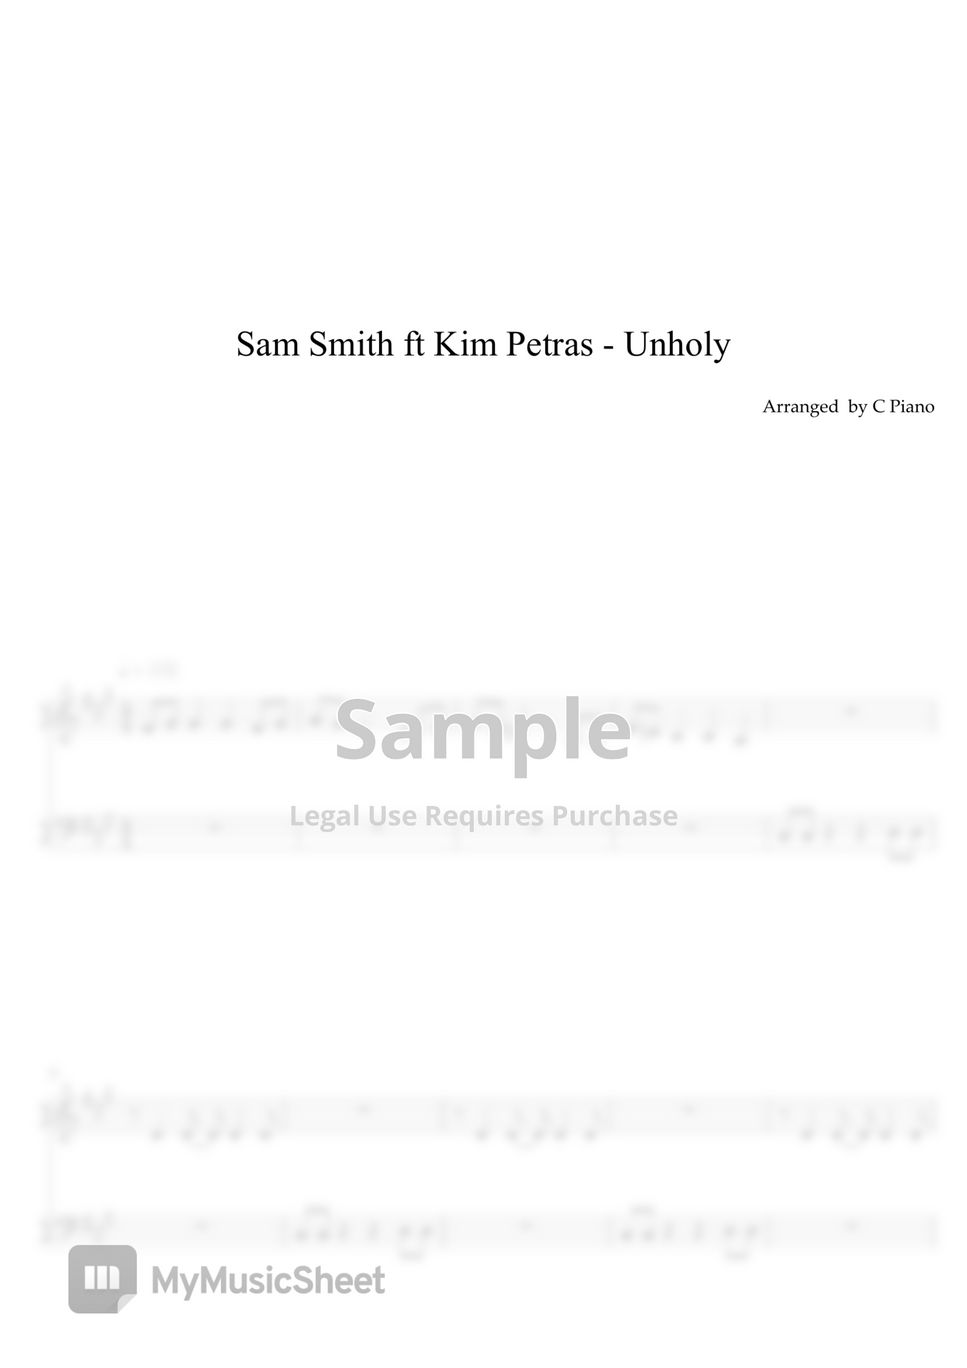 Sam Smith ft Kim Petras - Unholy (Easy Version) by C Piano